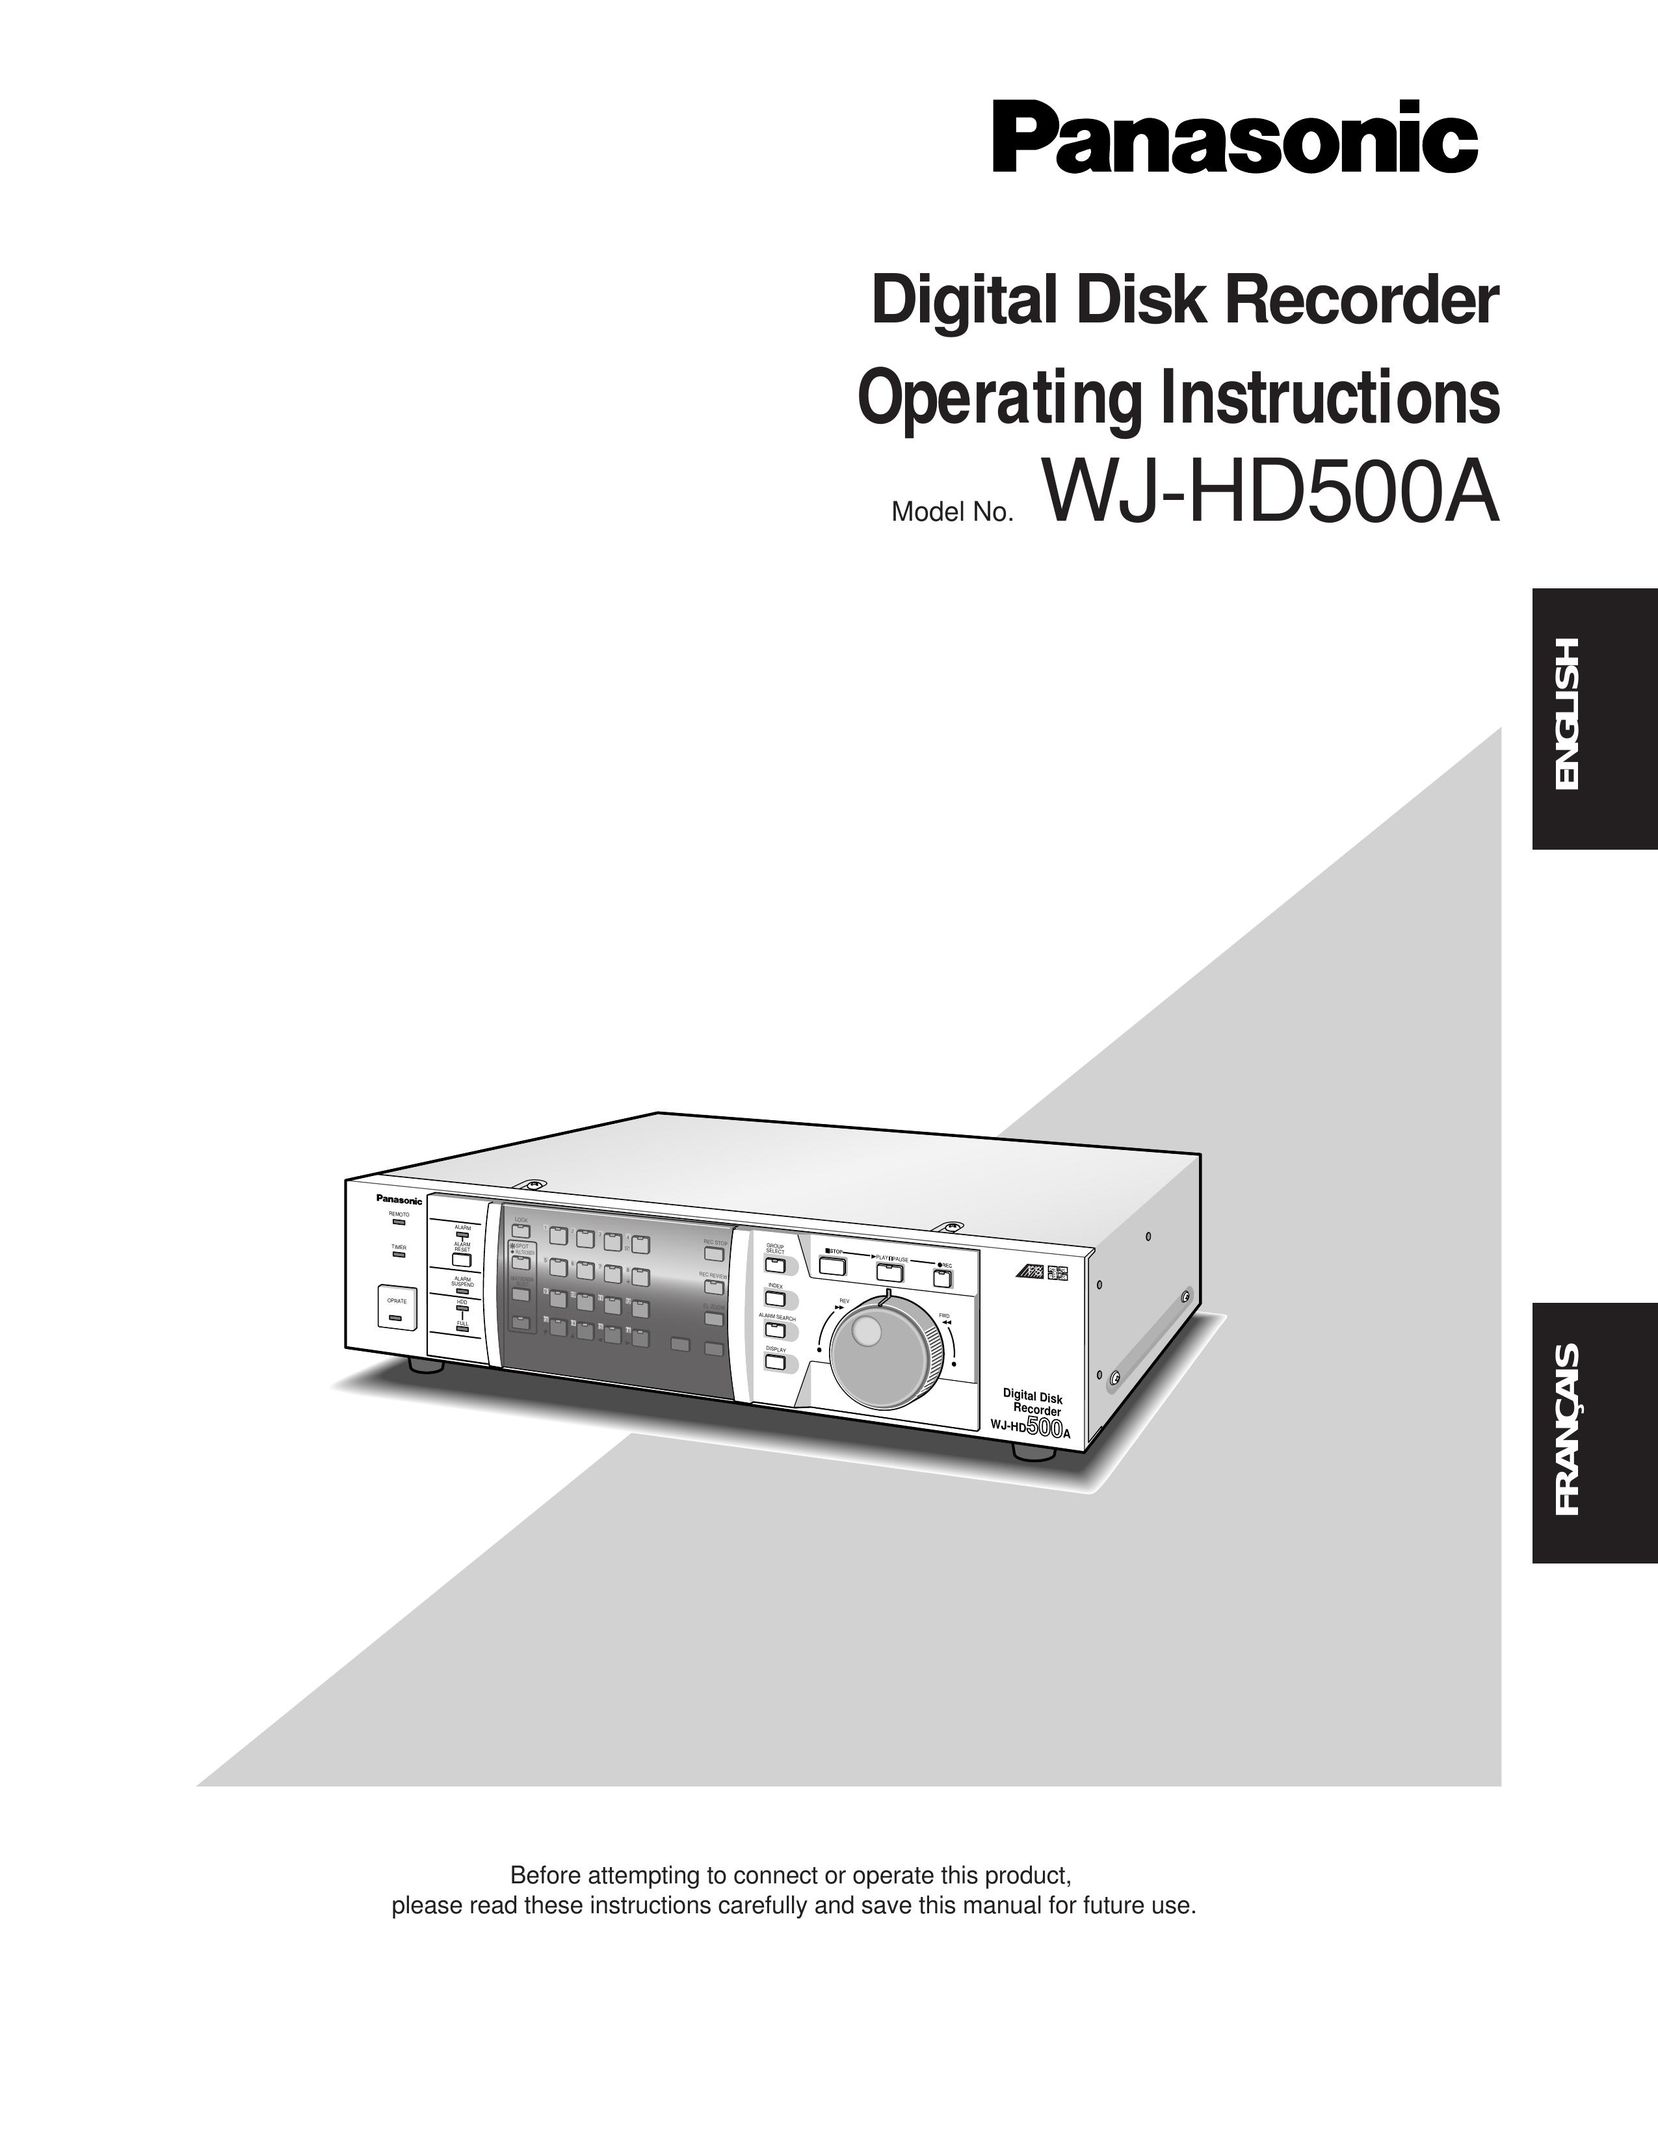 Panasonic WJ-HD500A DVR User Manual